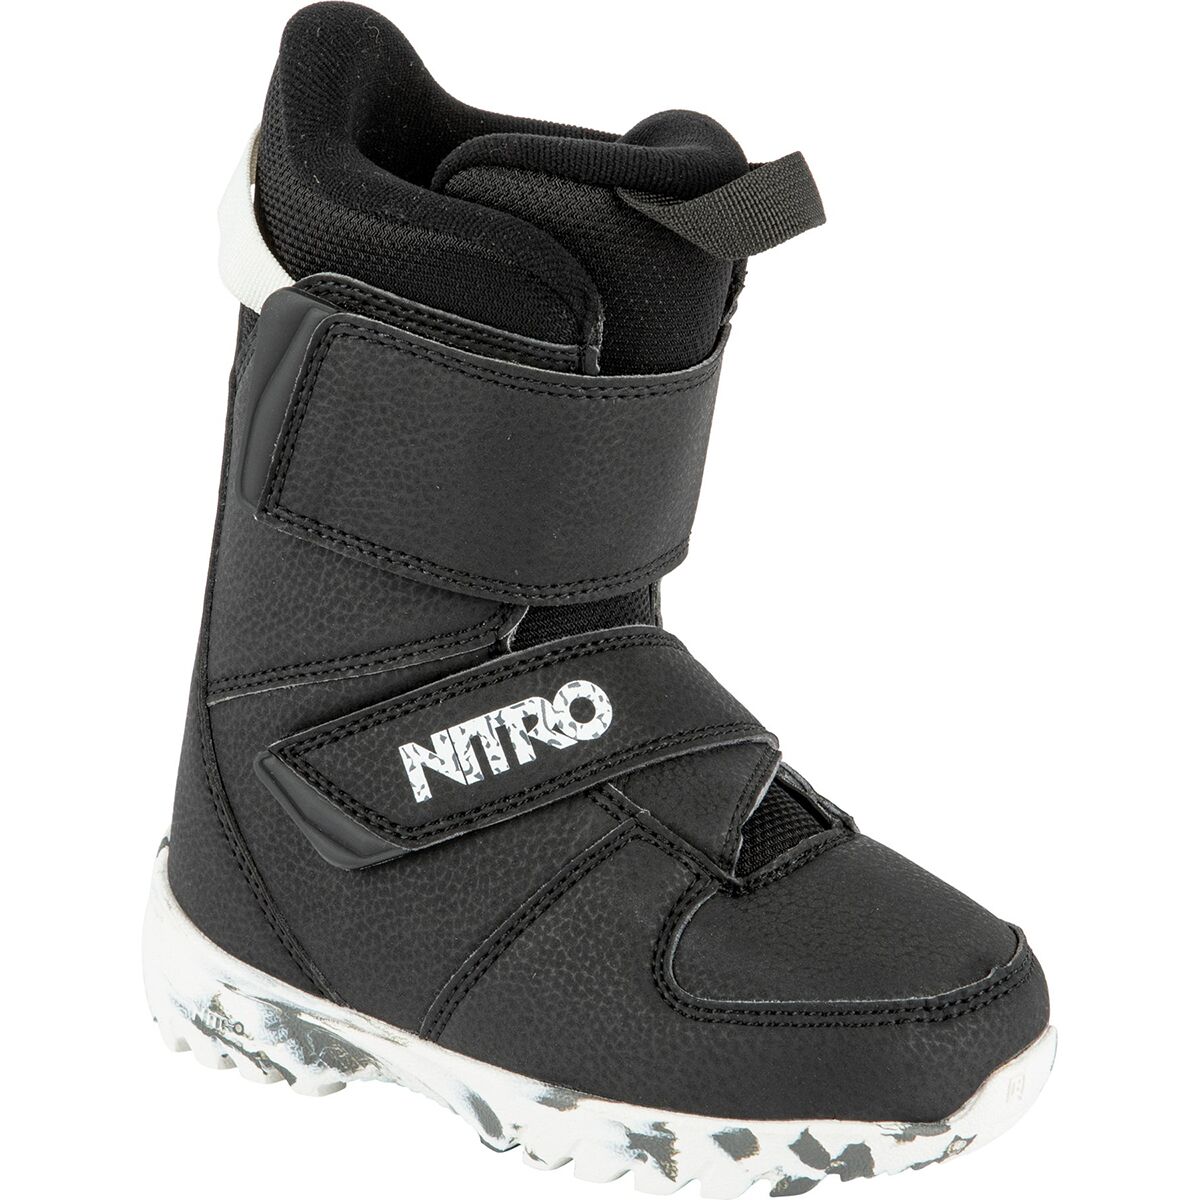 Nitro Rover QLS Snowboard Boot - 2022 - Kids' Black/White/Charcoal